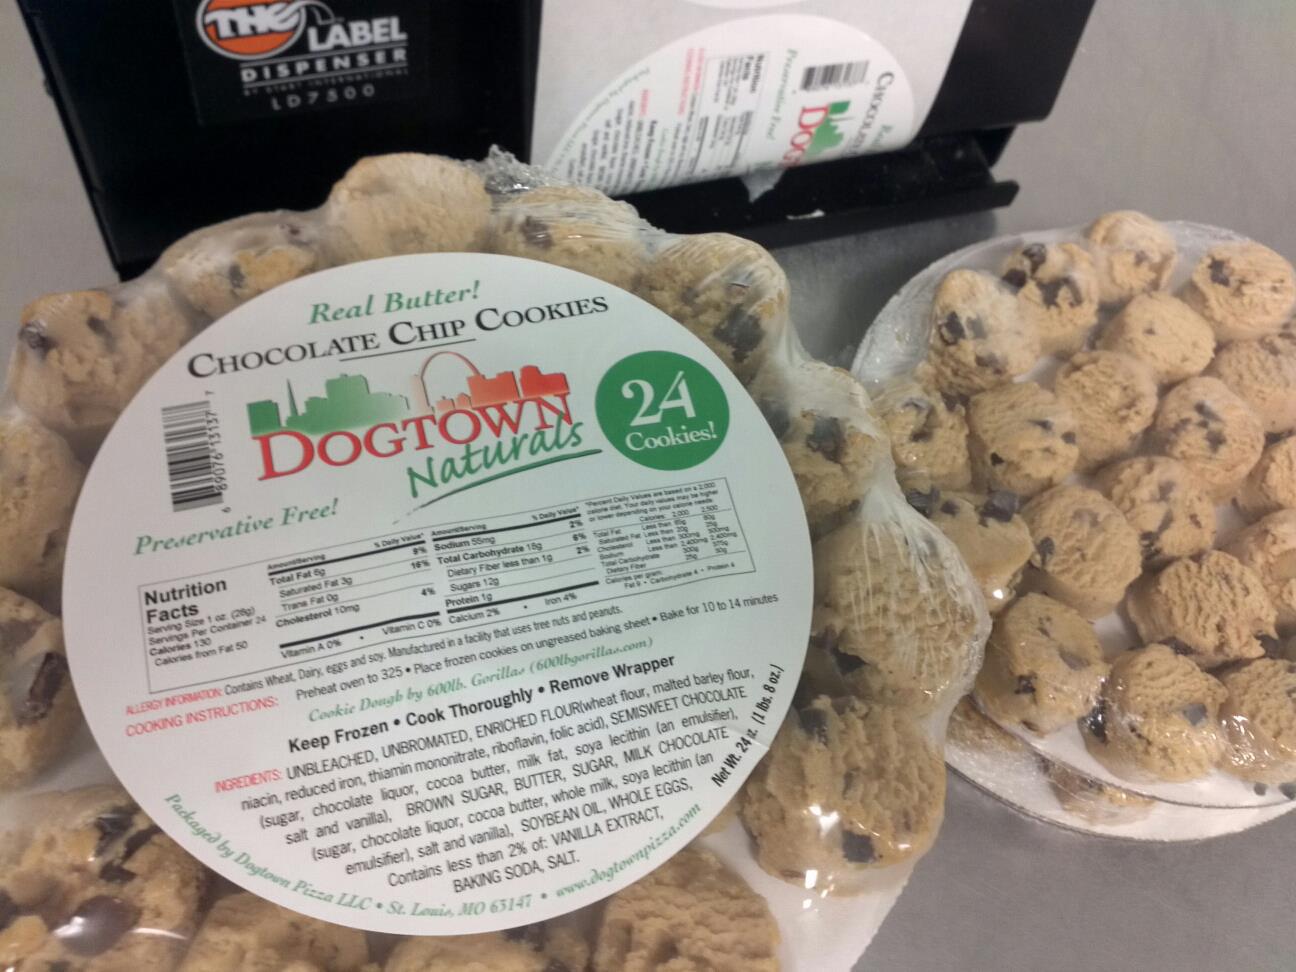 Dogtown Chocolate Chip Cookies